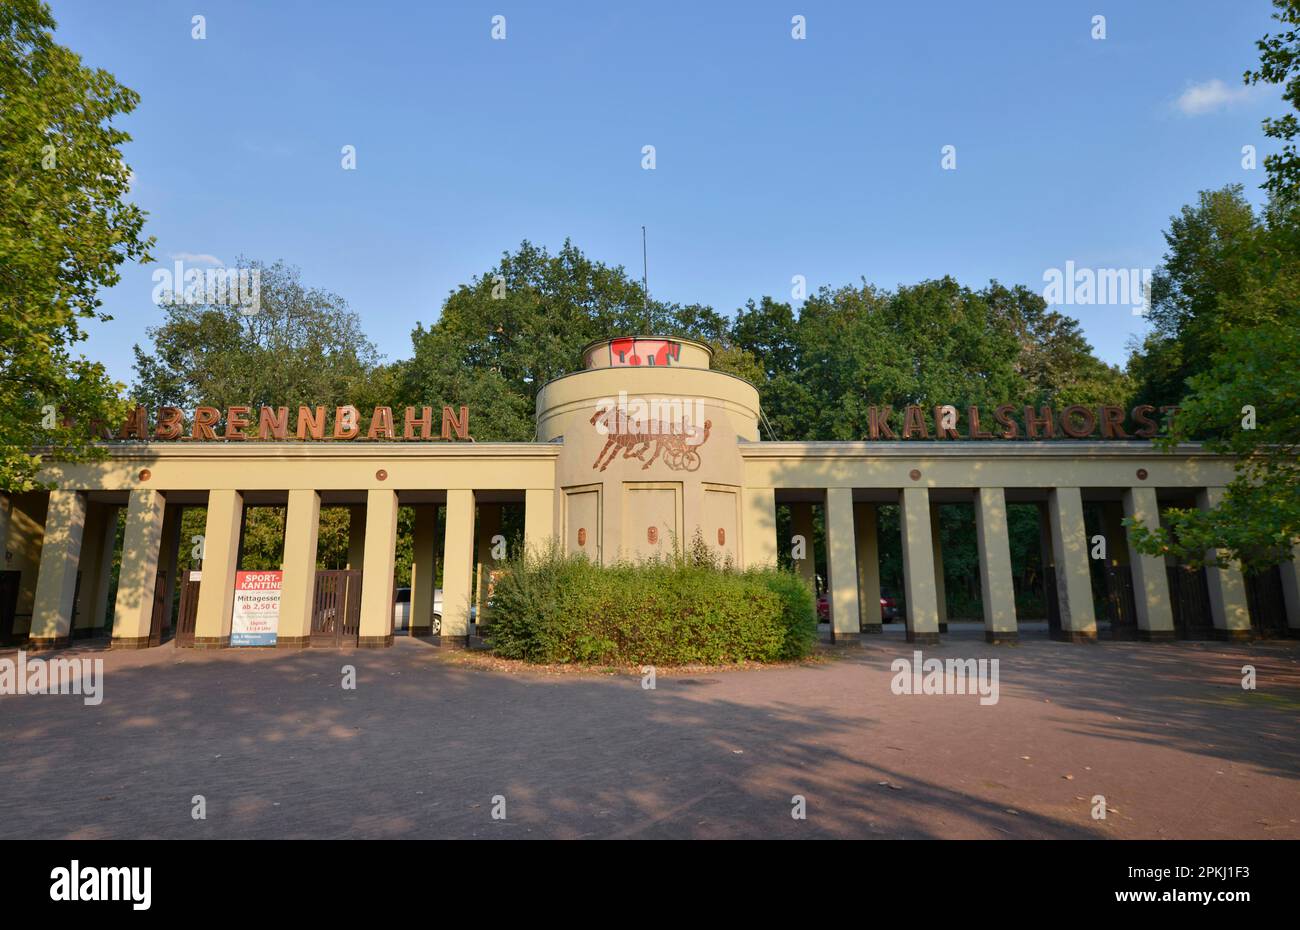 Entrance, Trabrennbahn, Karlshorst, Lichtenberg, Berlin, Germany Stock Photo